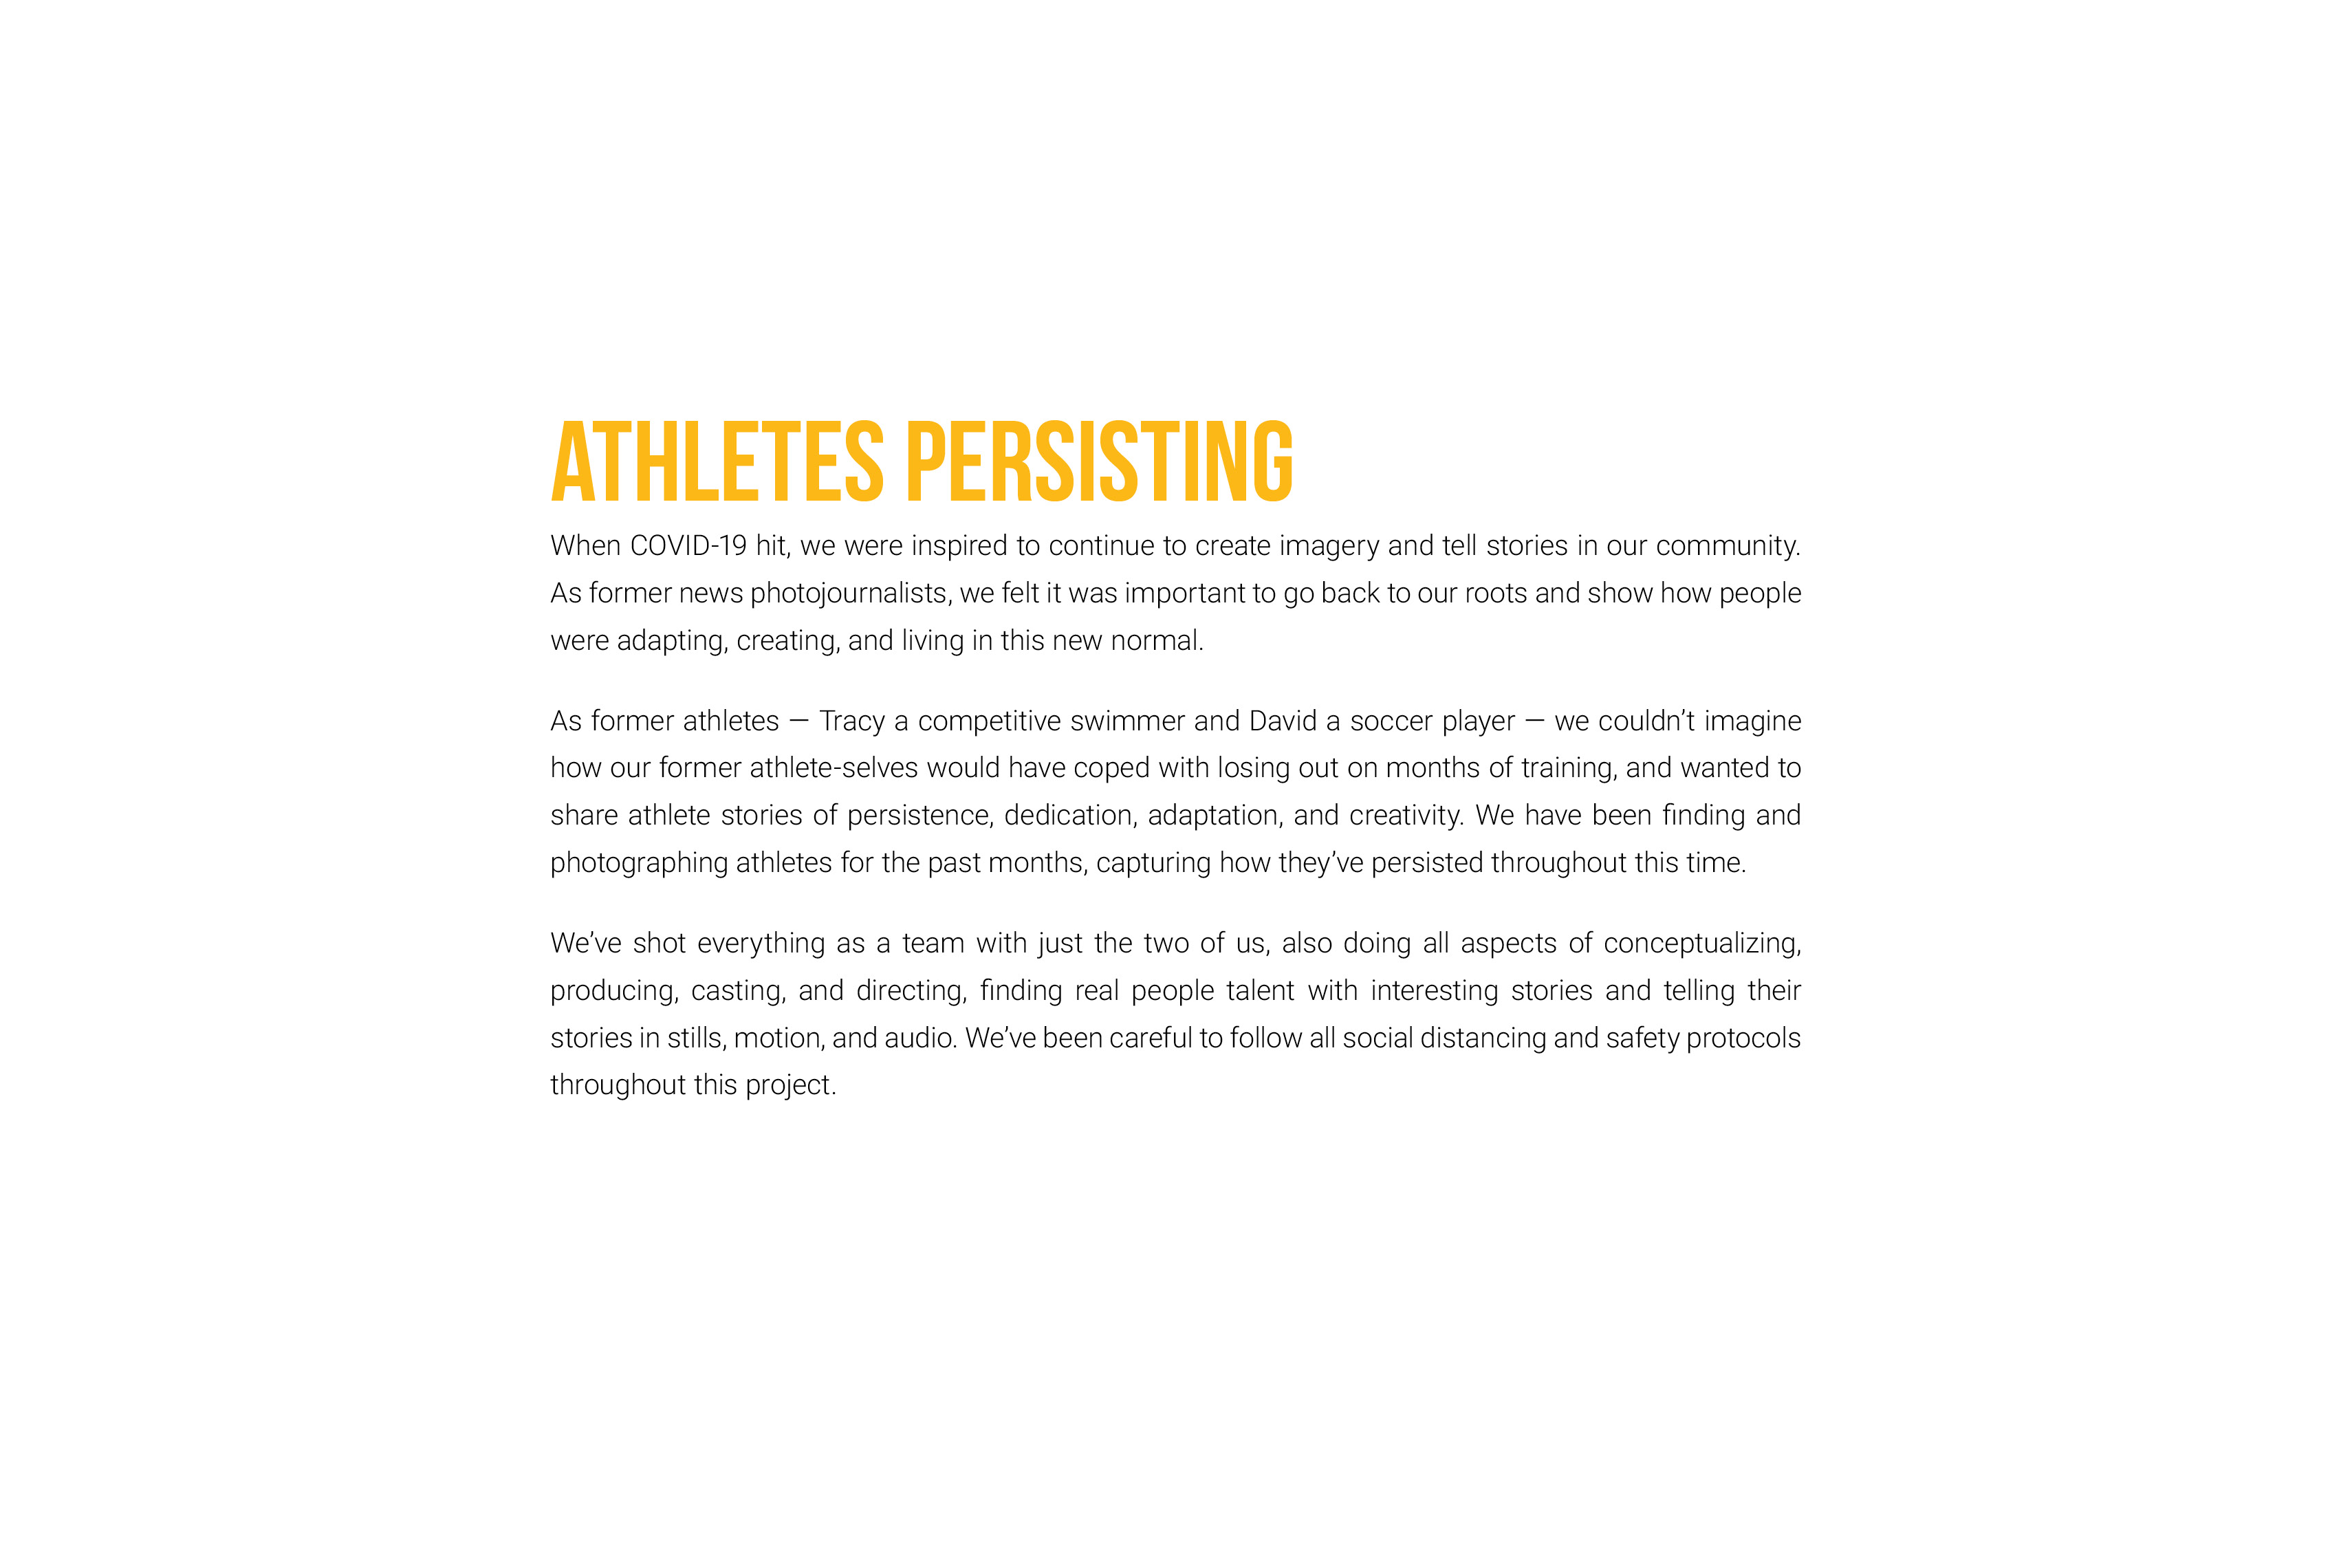 athletes-persisting-intro-text